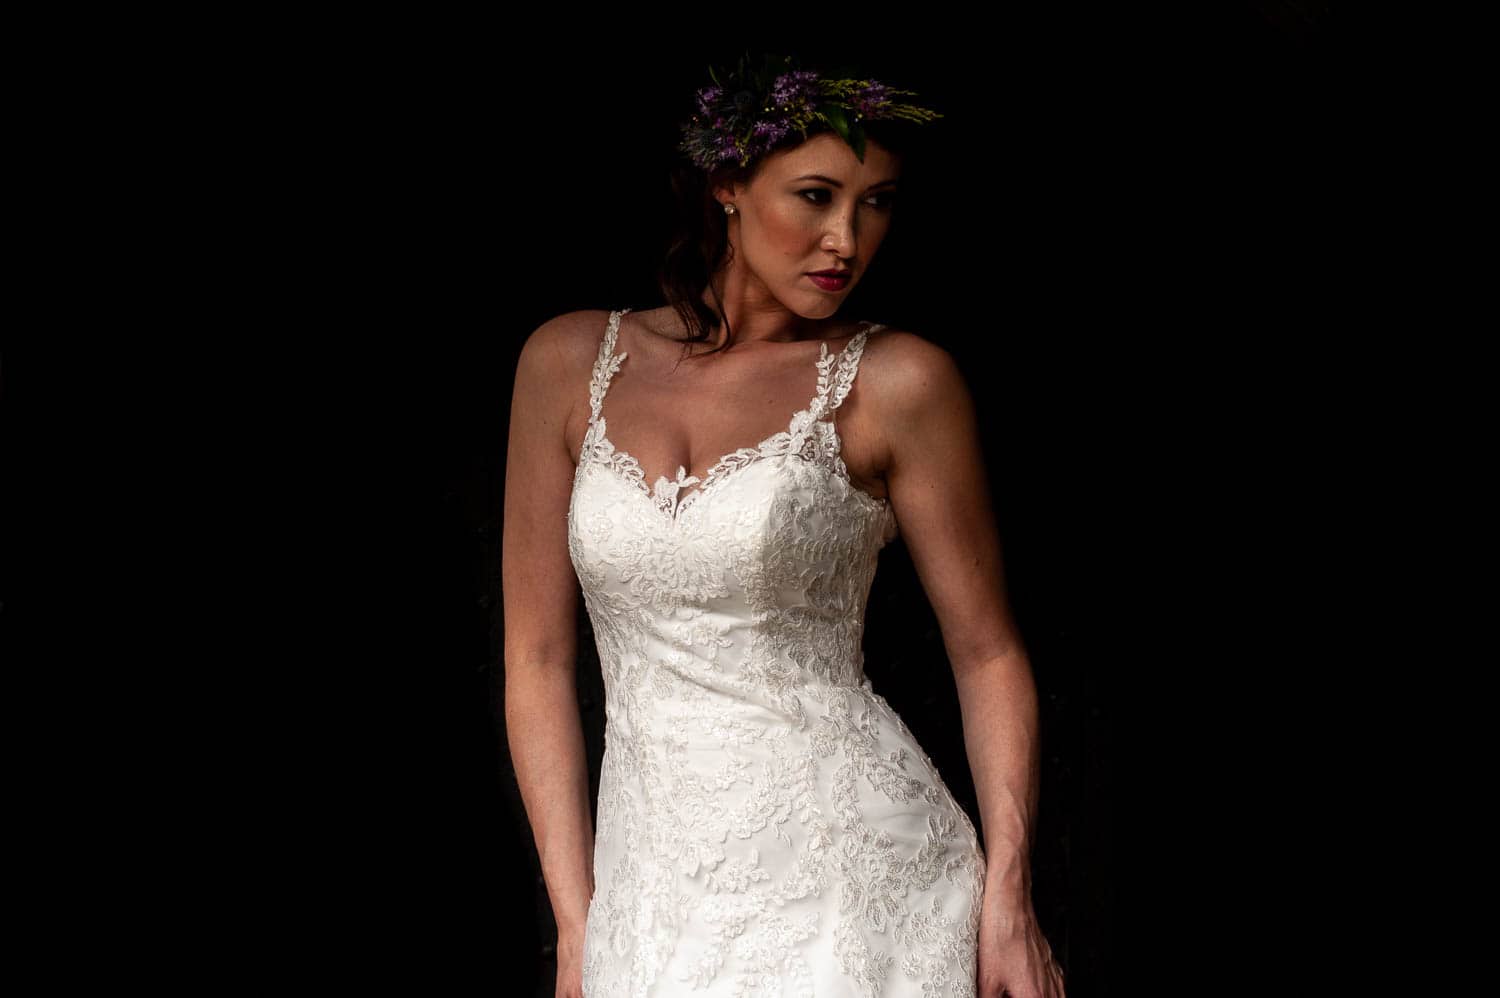 stunning bride in dark setting